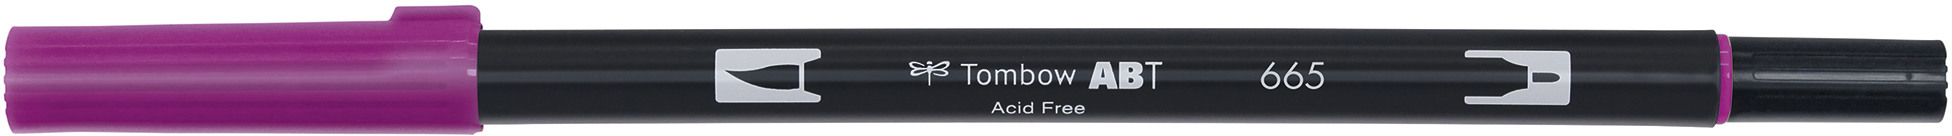 TOMBOW Dual Brush Pen ABT 665 pourpre